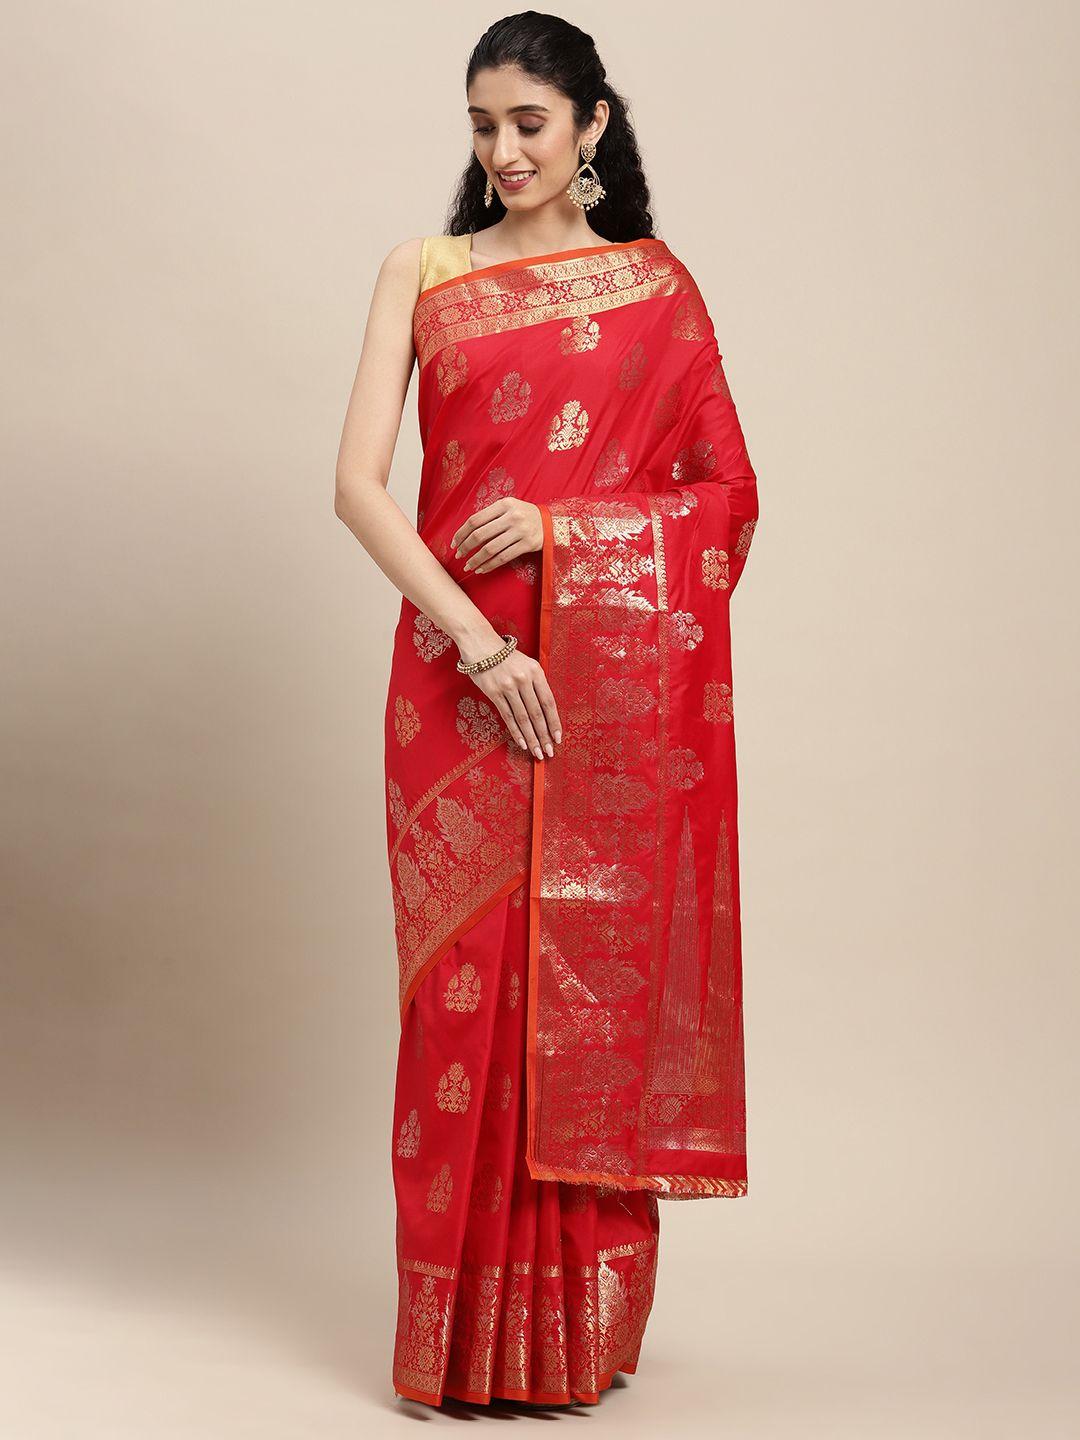 sangam prints red floral woven design pure silk saree